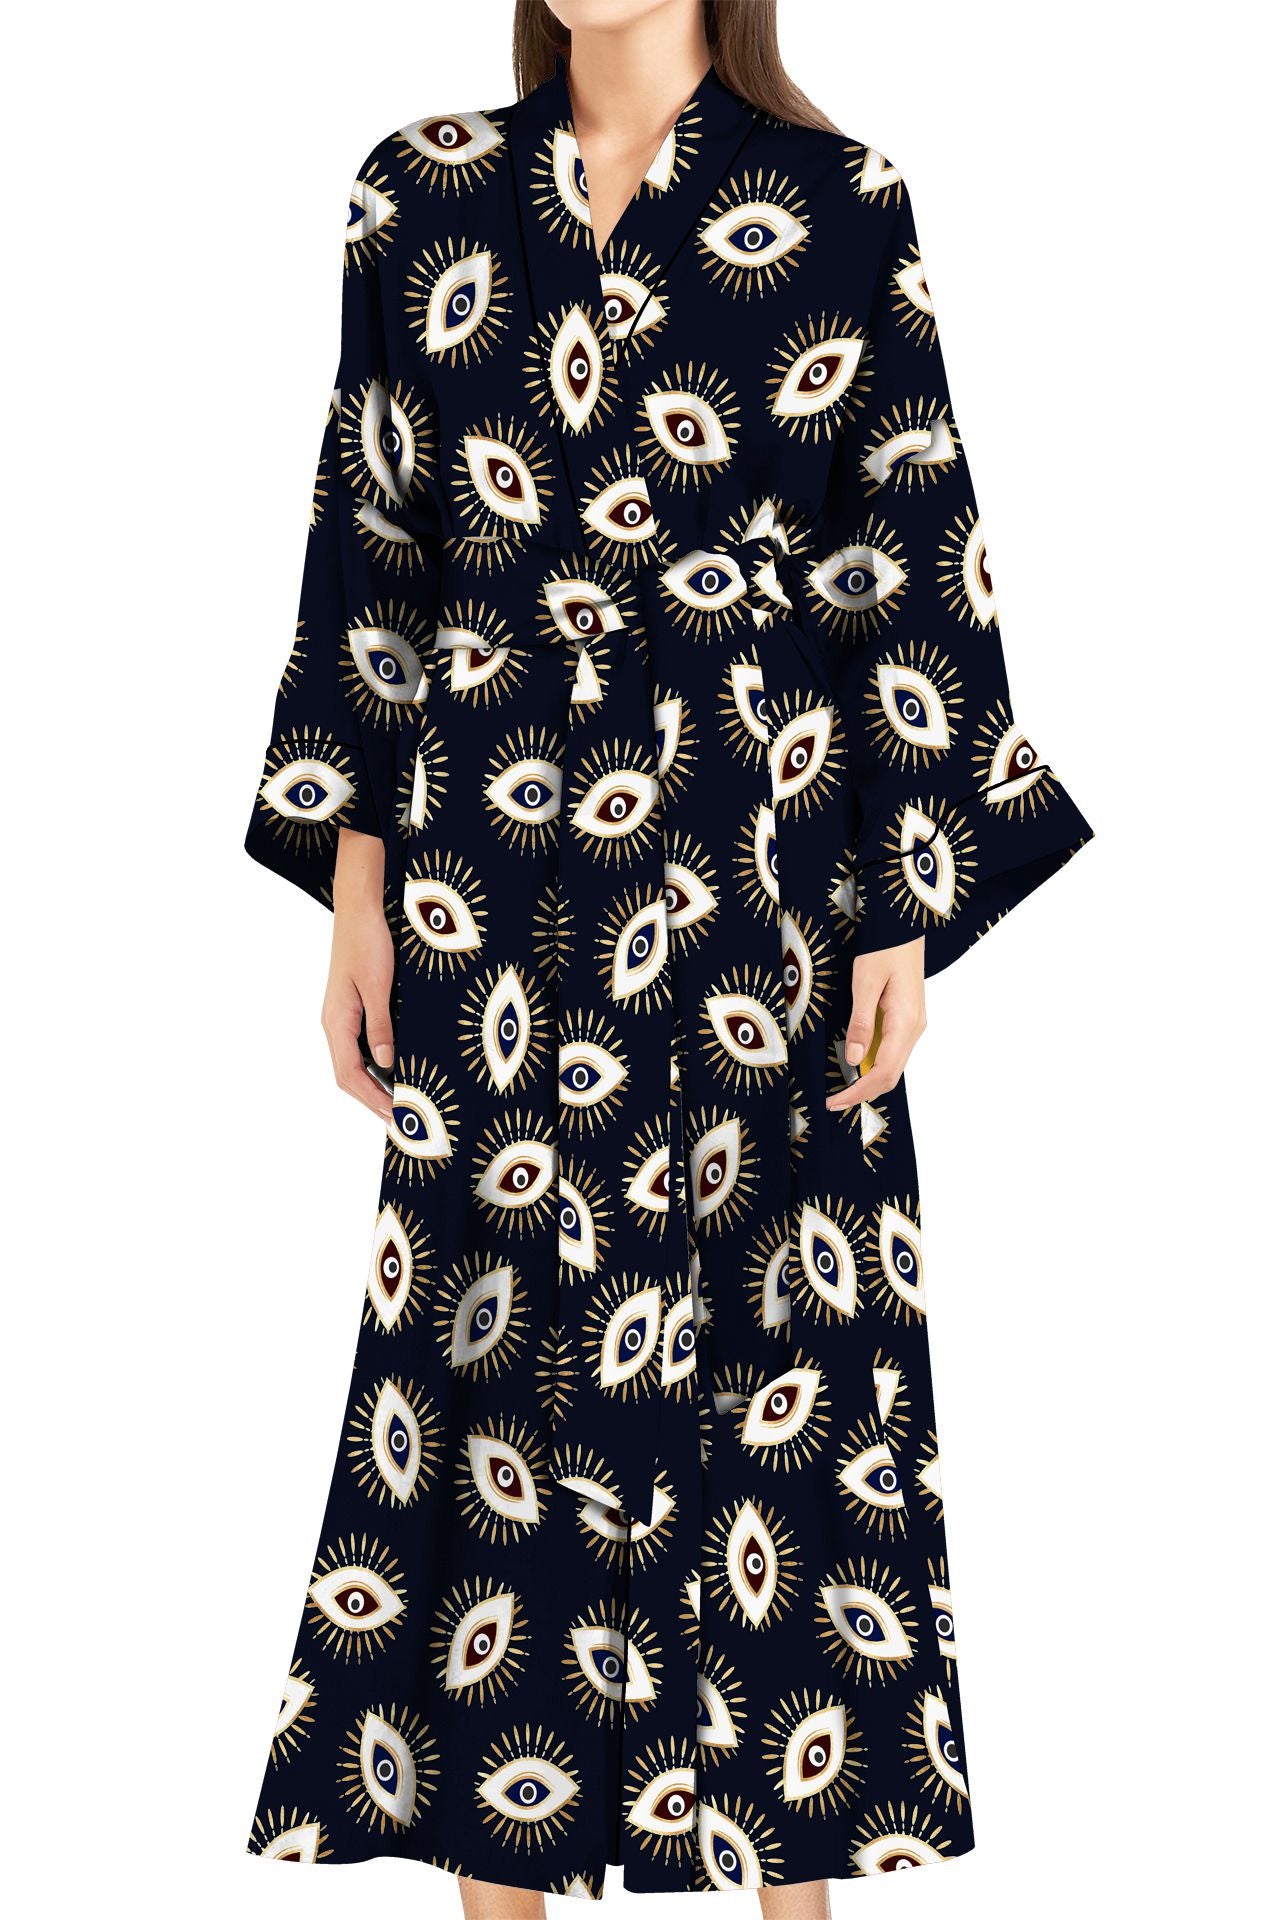 "Kyle X Shahida" "ladies black robe" "black silk kimono" "silk robes for women short"